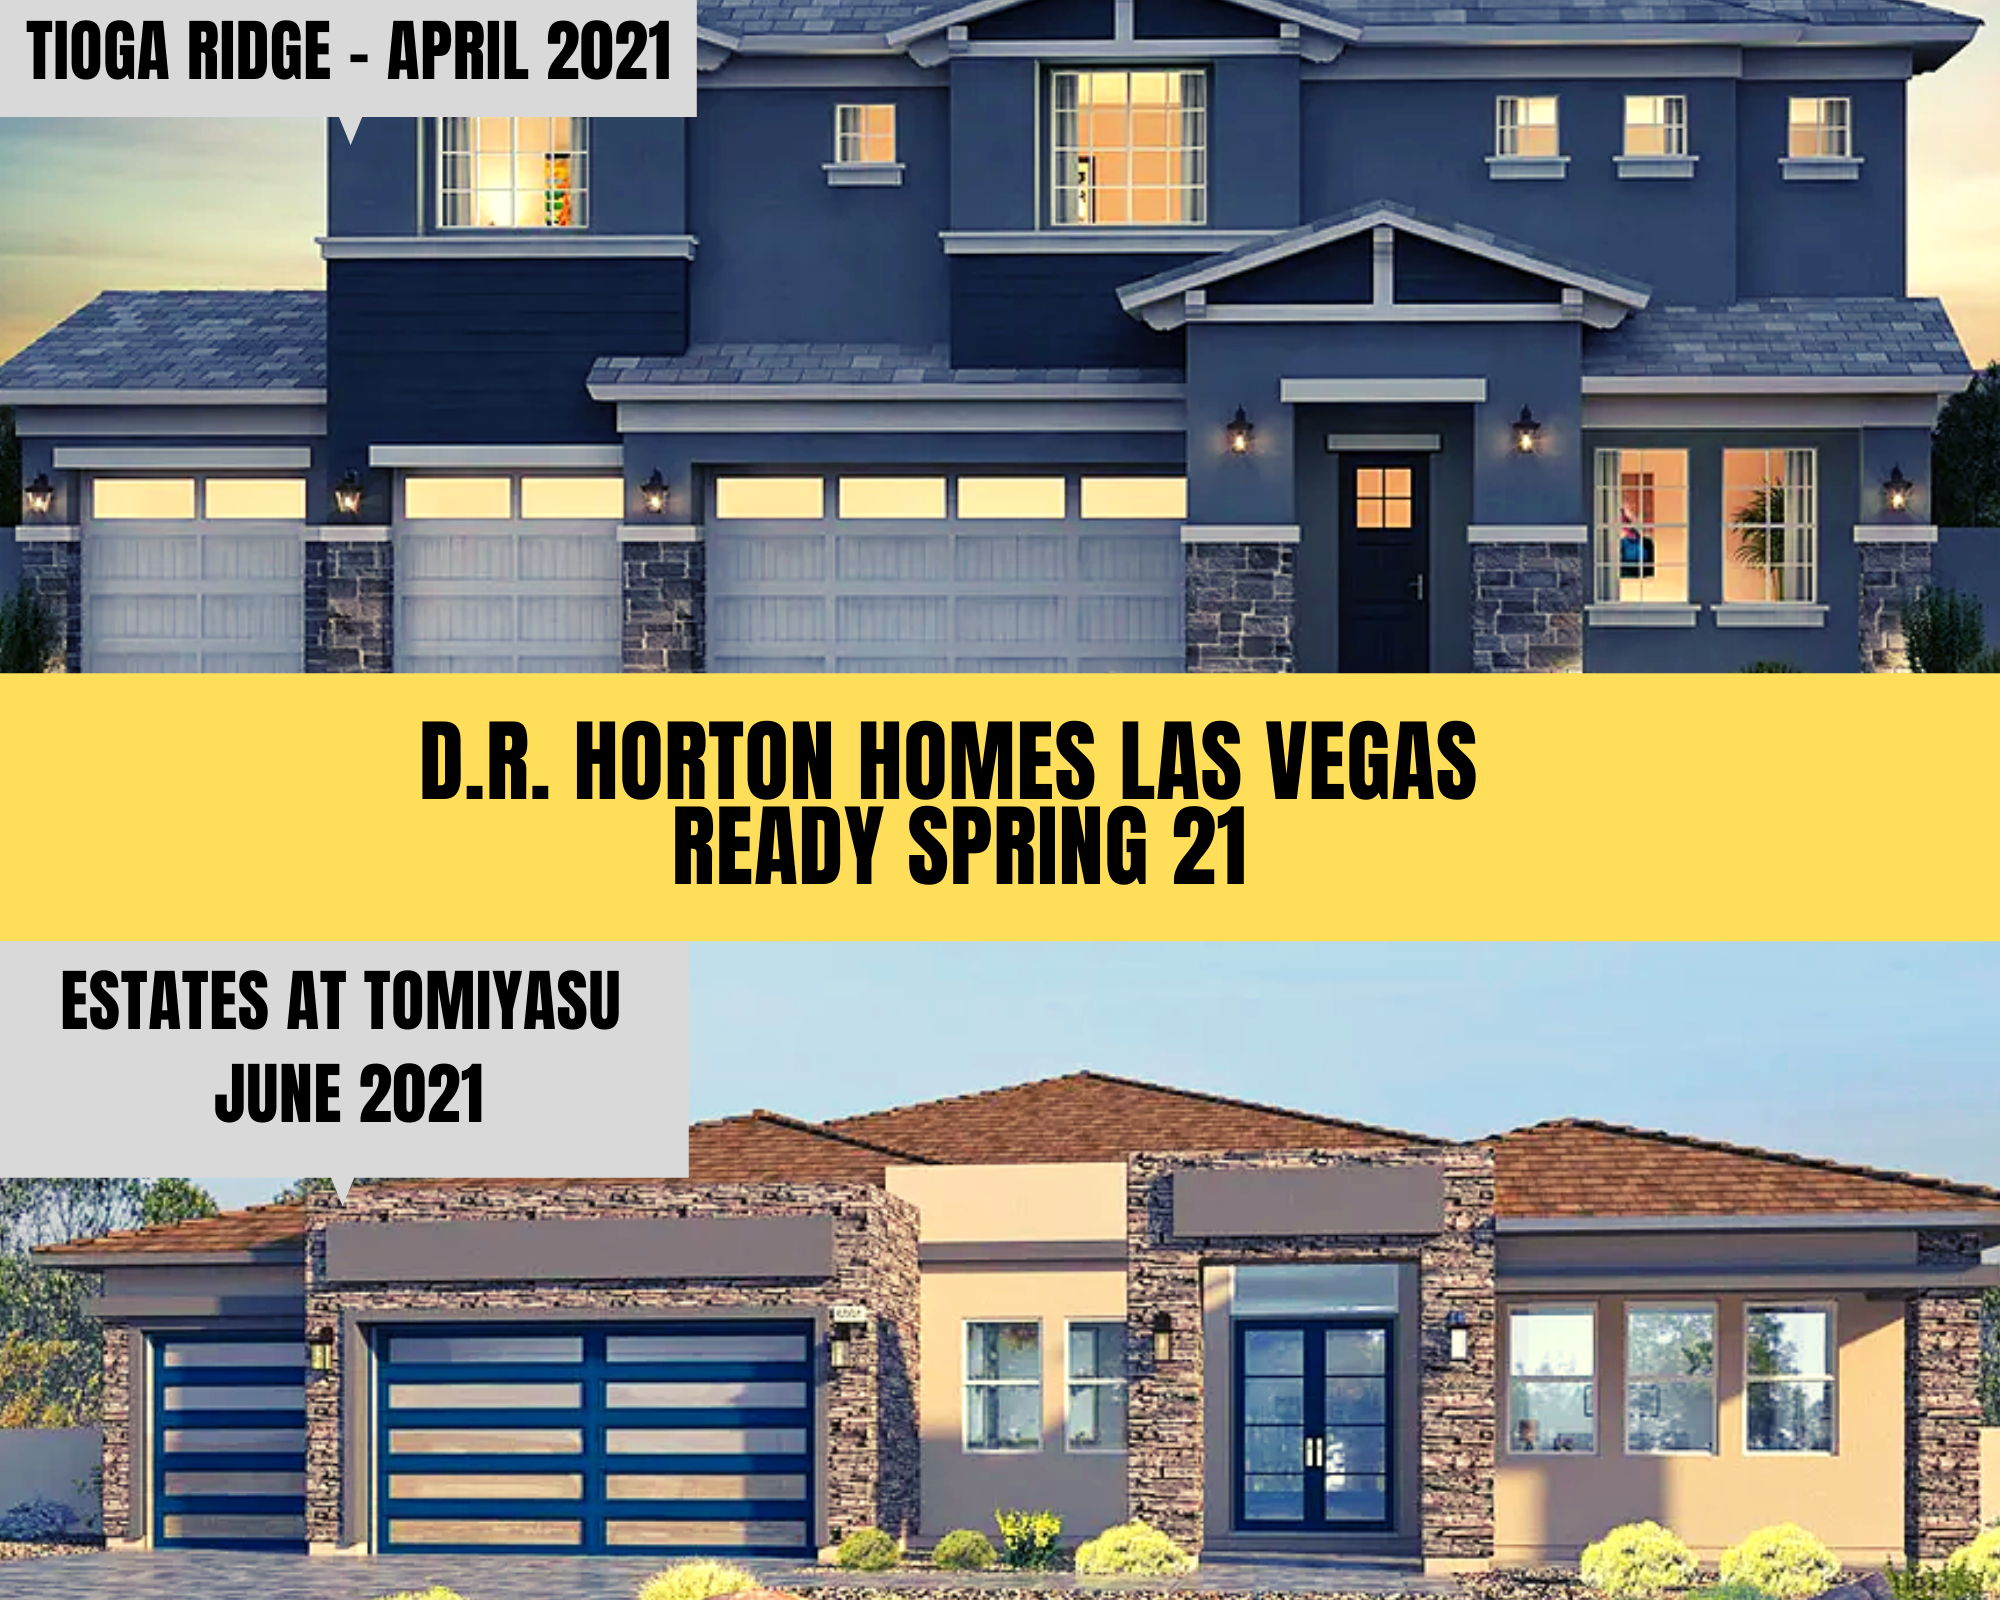 D.R. Horton homes Las Vegas ready spring 2021